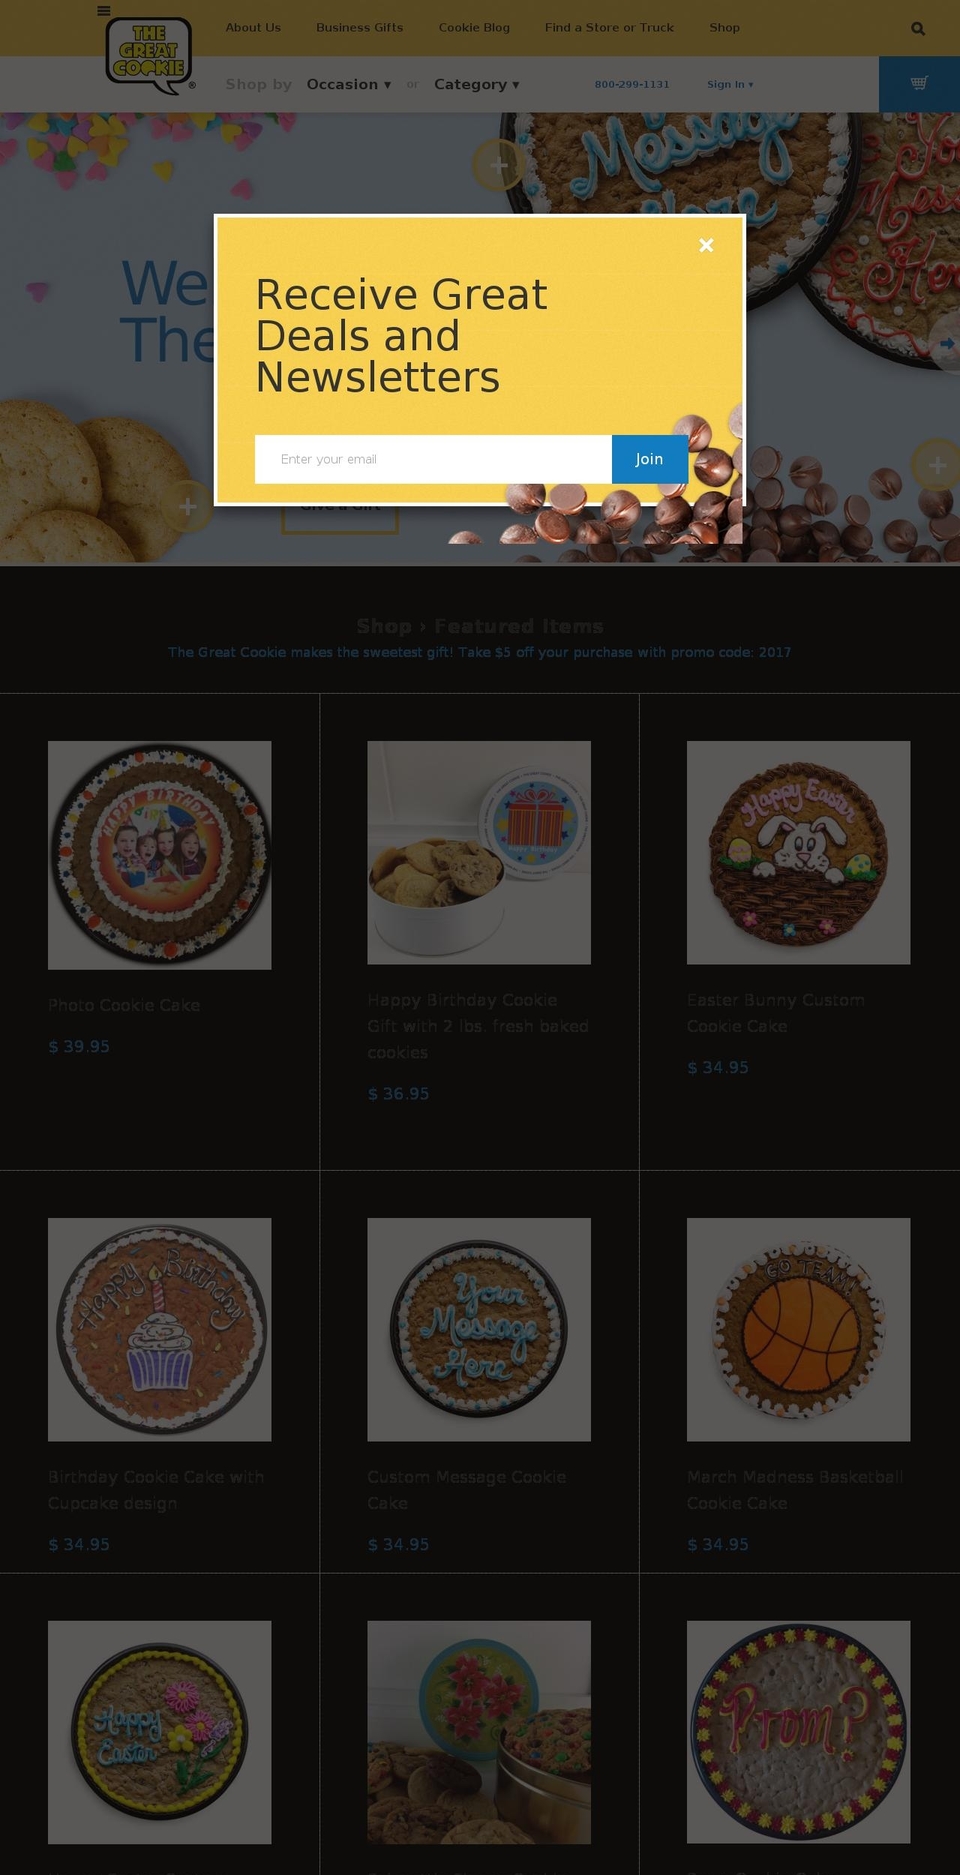 thegreatcookie.info shopify website screenshot